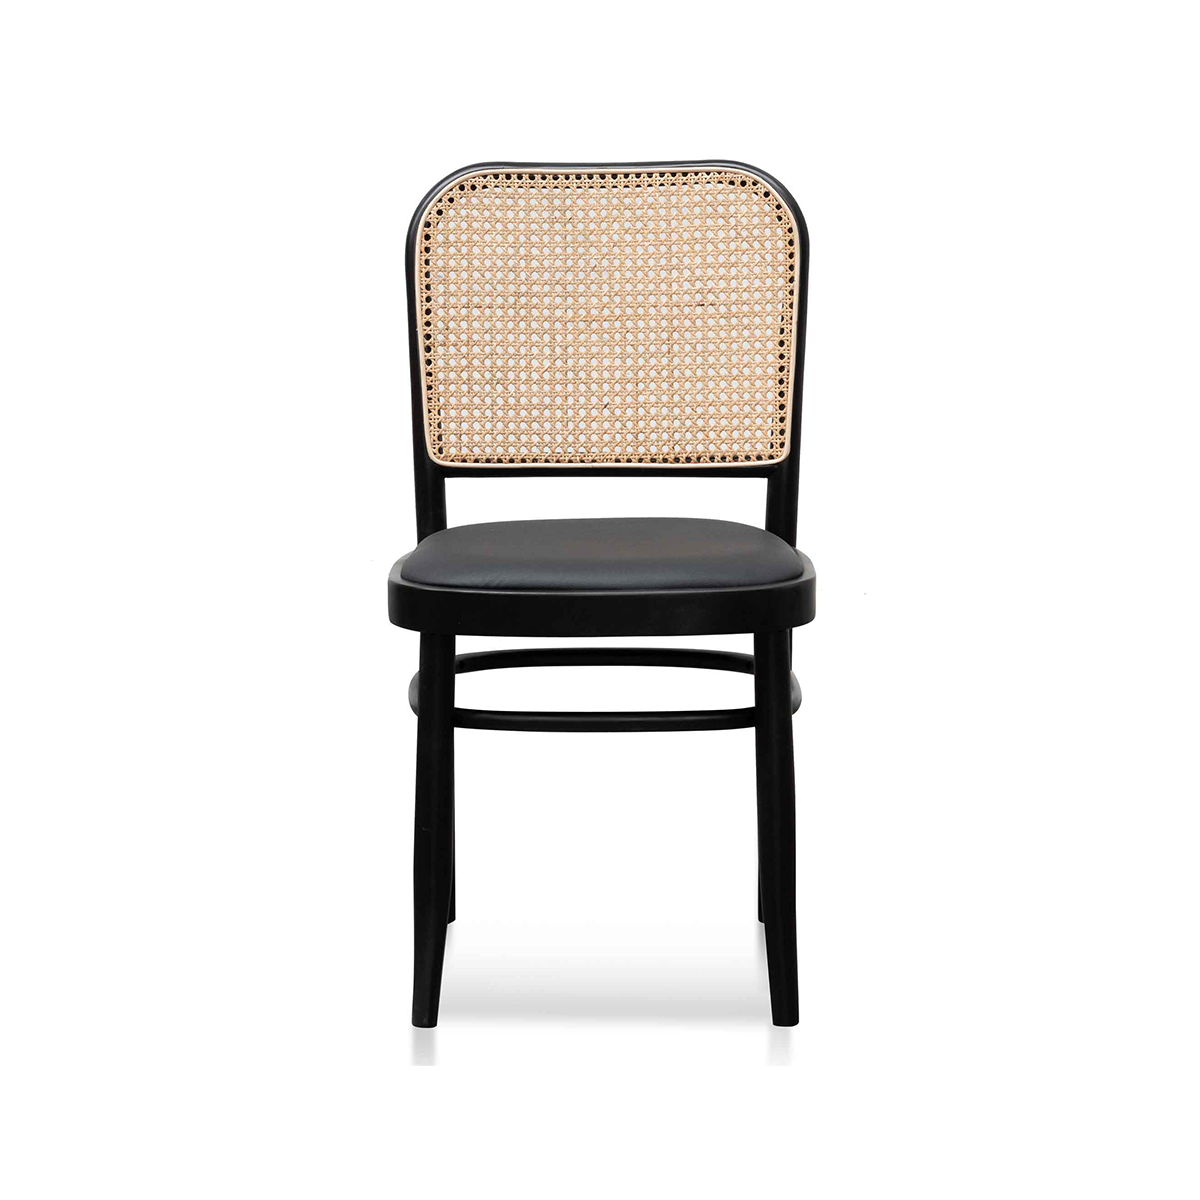 FondHouse Zomo Black Cushion Dining Chair - Natural Rattan